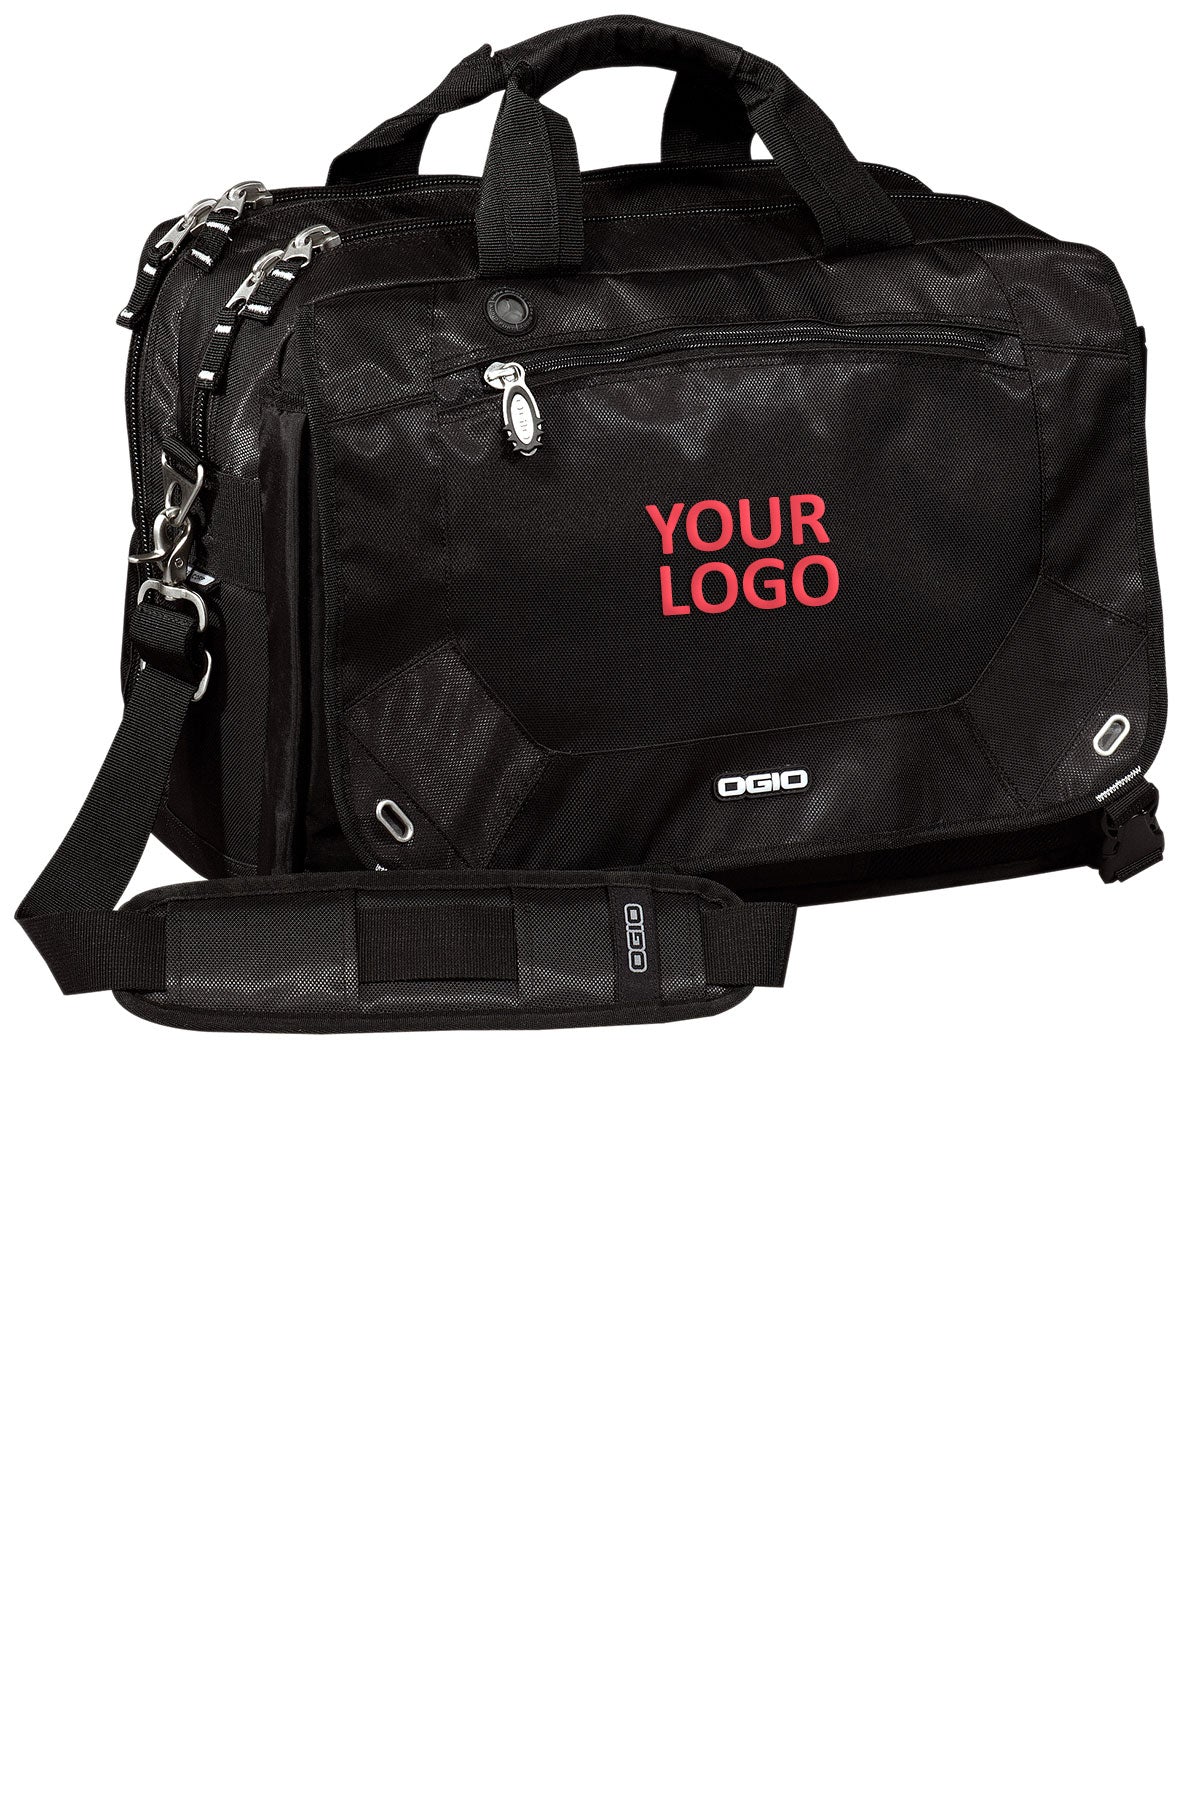 OGIO Corporate City Corp Customized Messenger Bags, Black